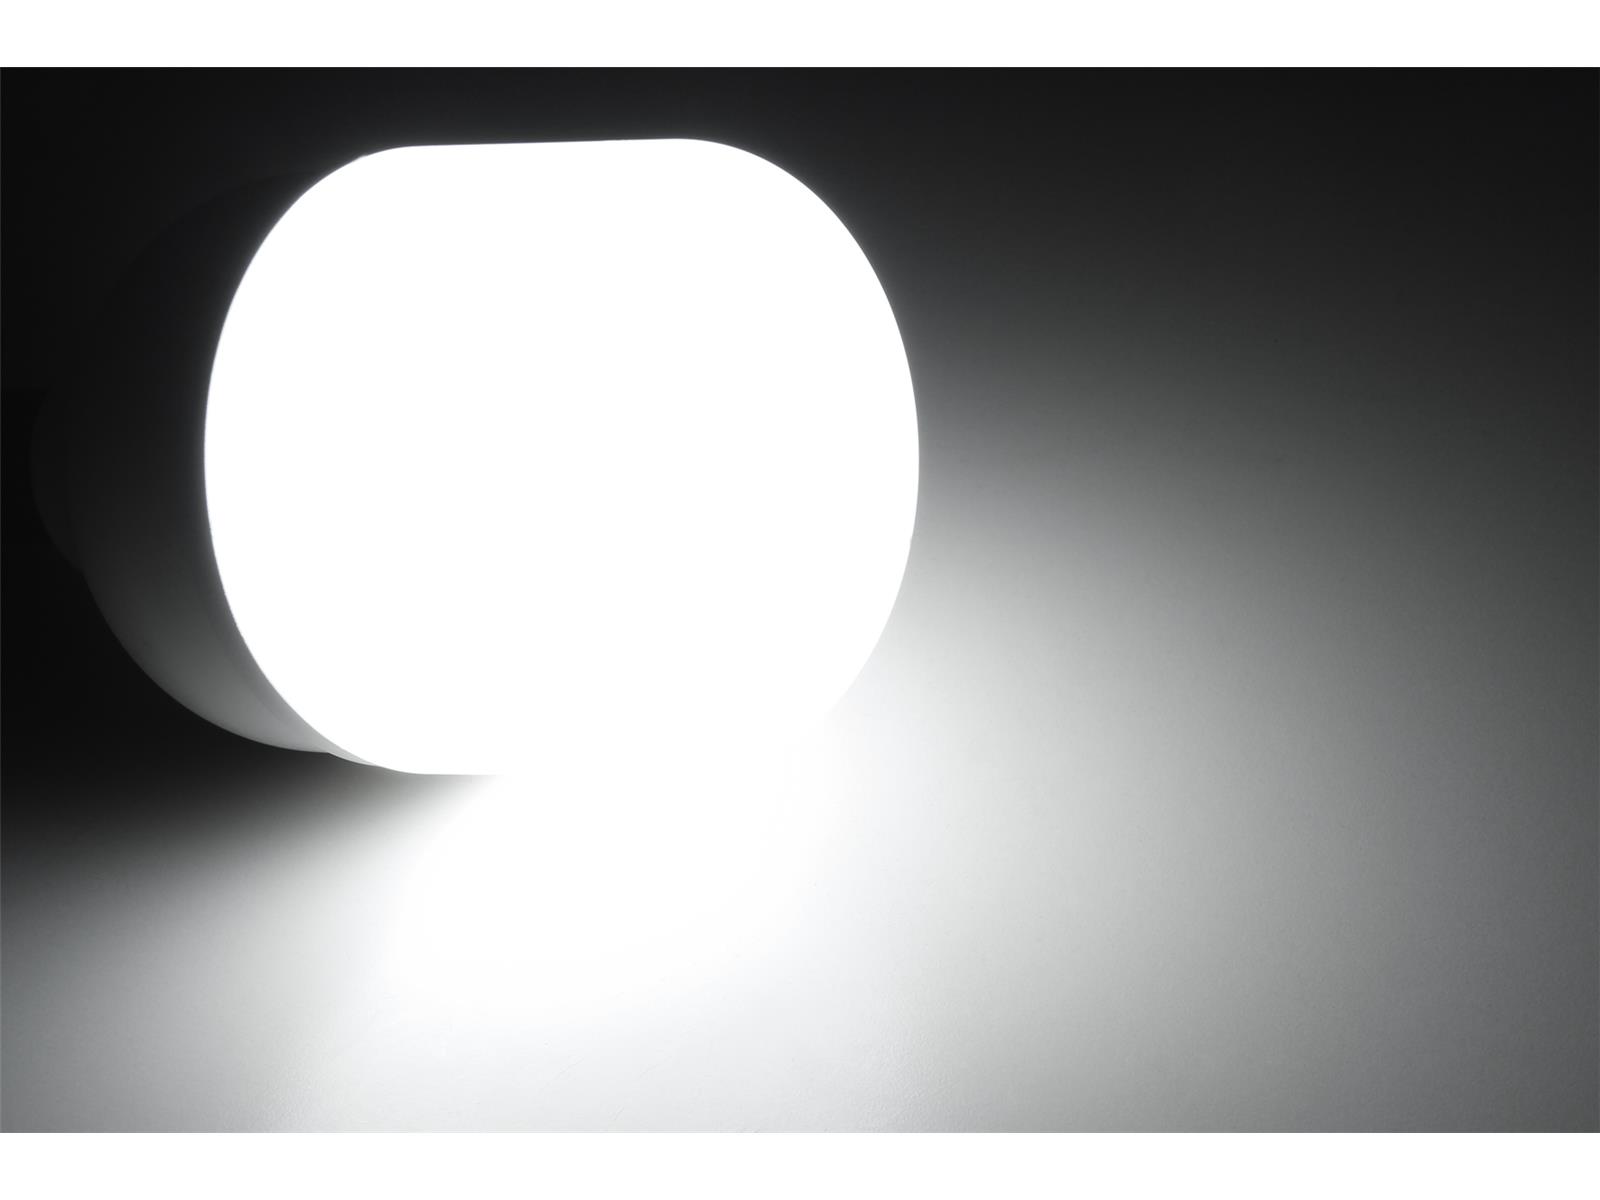 LED Lampe McShine ''BIG50'' E27, 50W, 4600lm, 138x254mm, neutralweiß